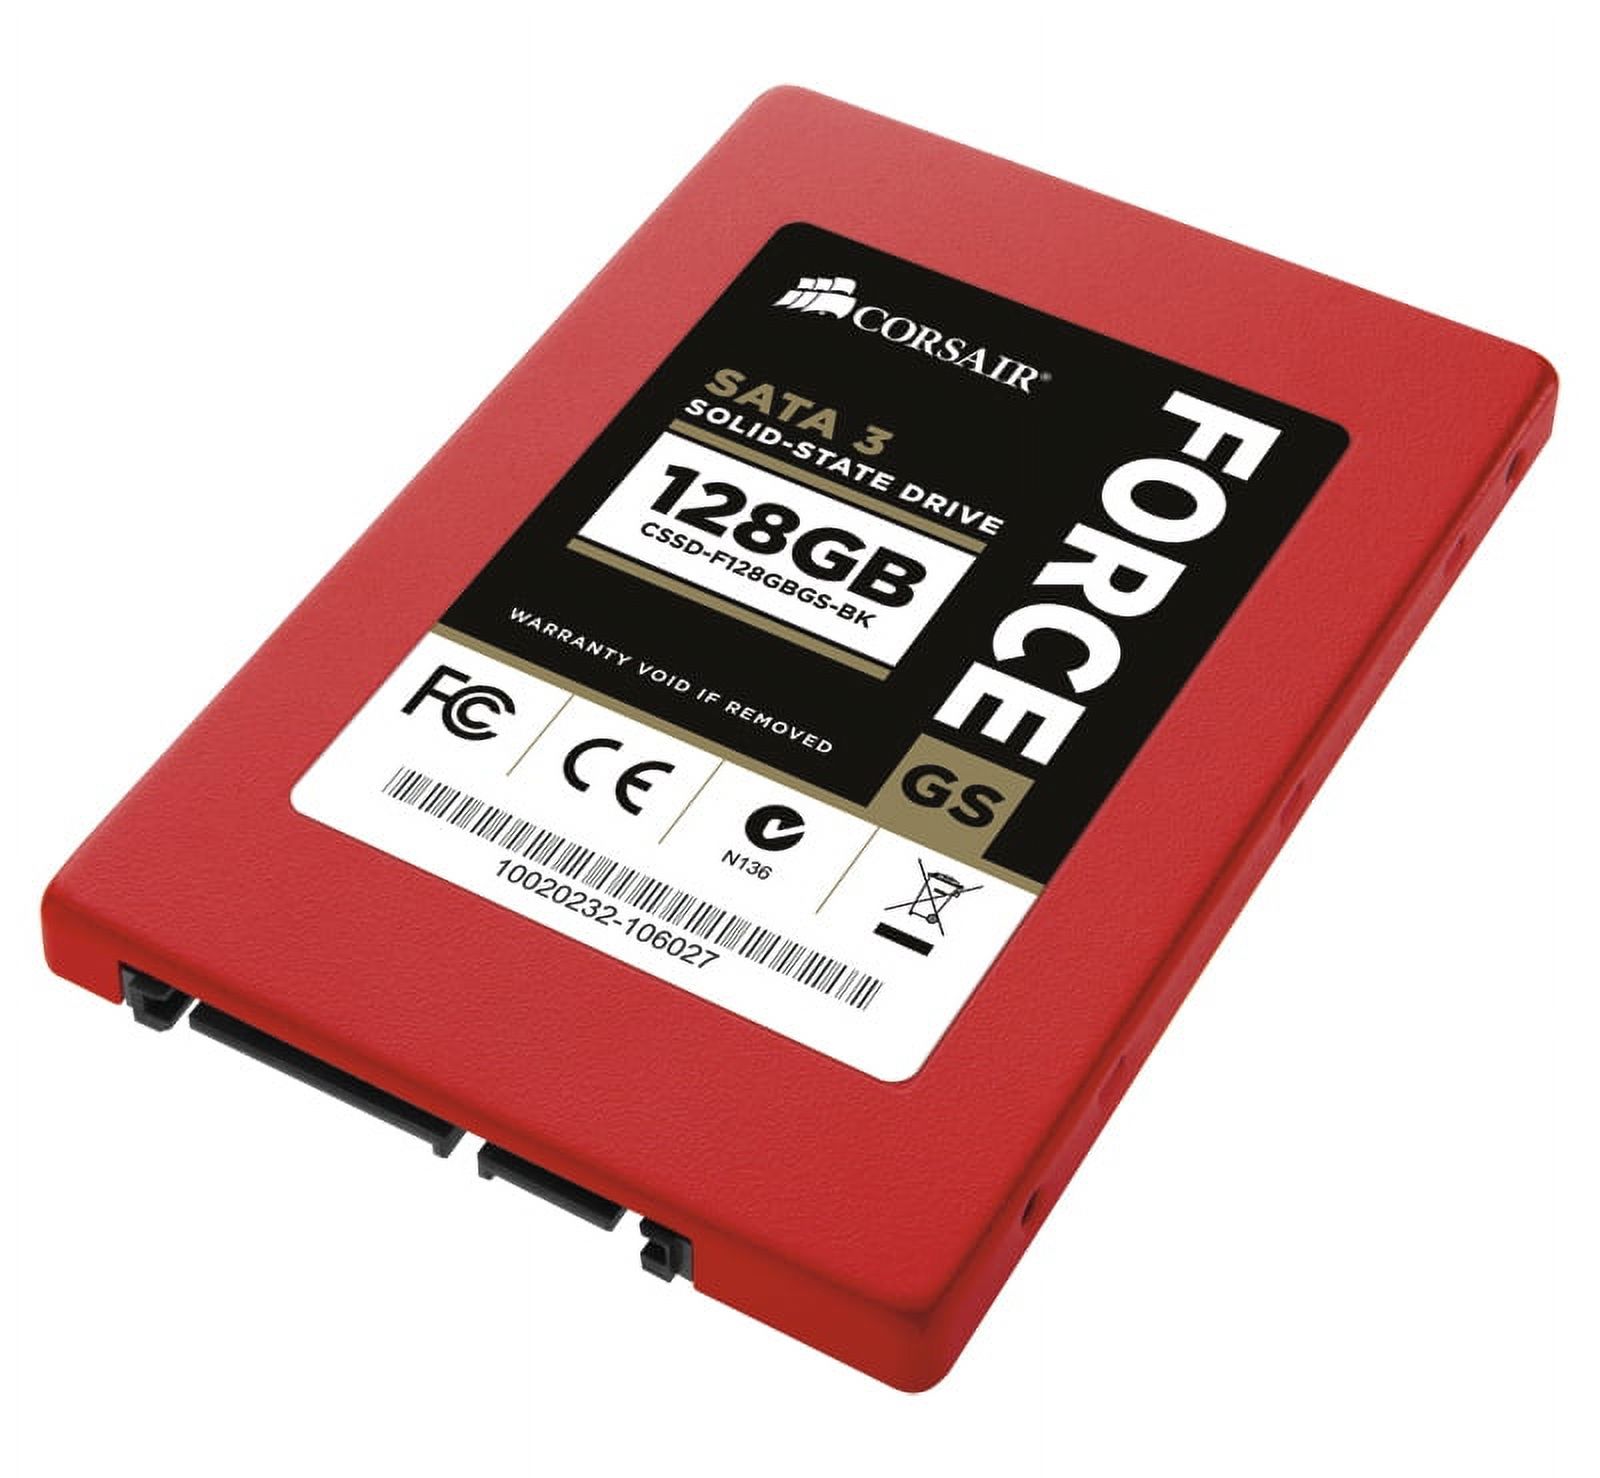 Corsair 128 GB Solid State Drive, 2.5" Internal, SATA (SATA/600), Red - image 2 of 2